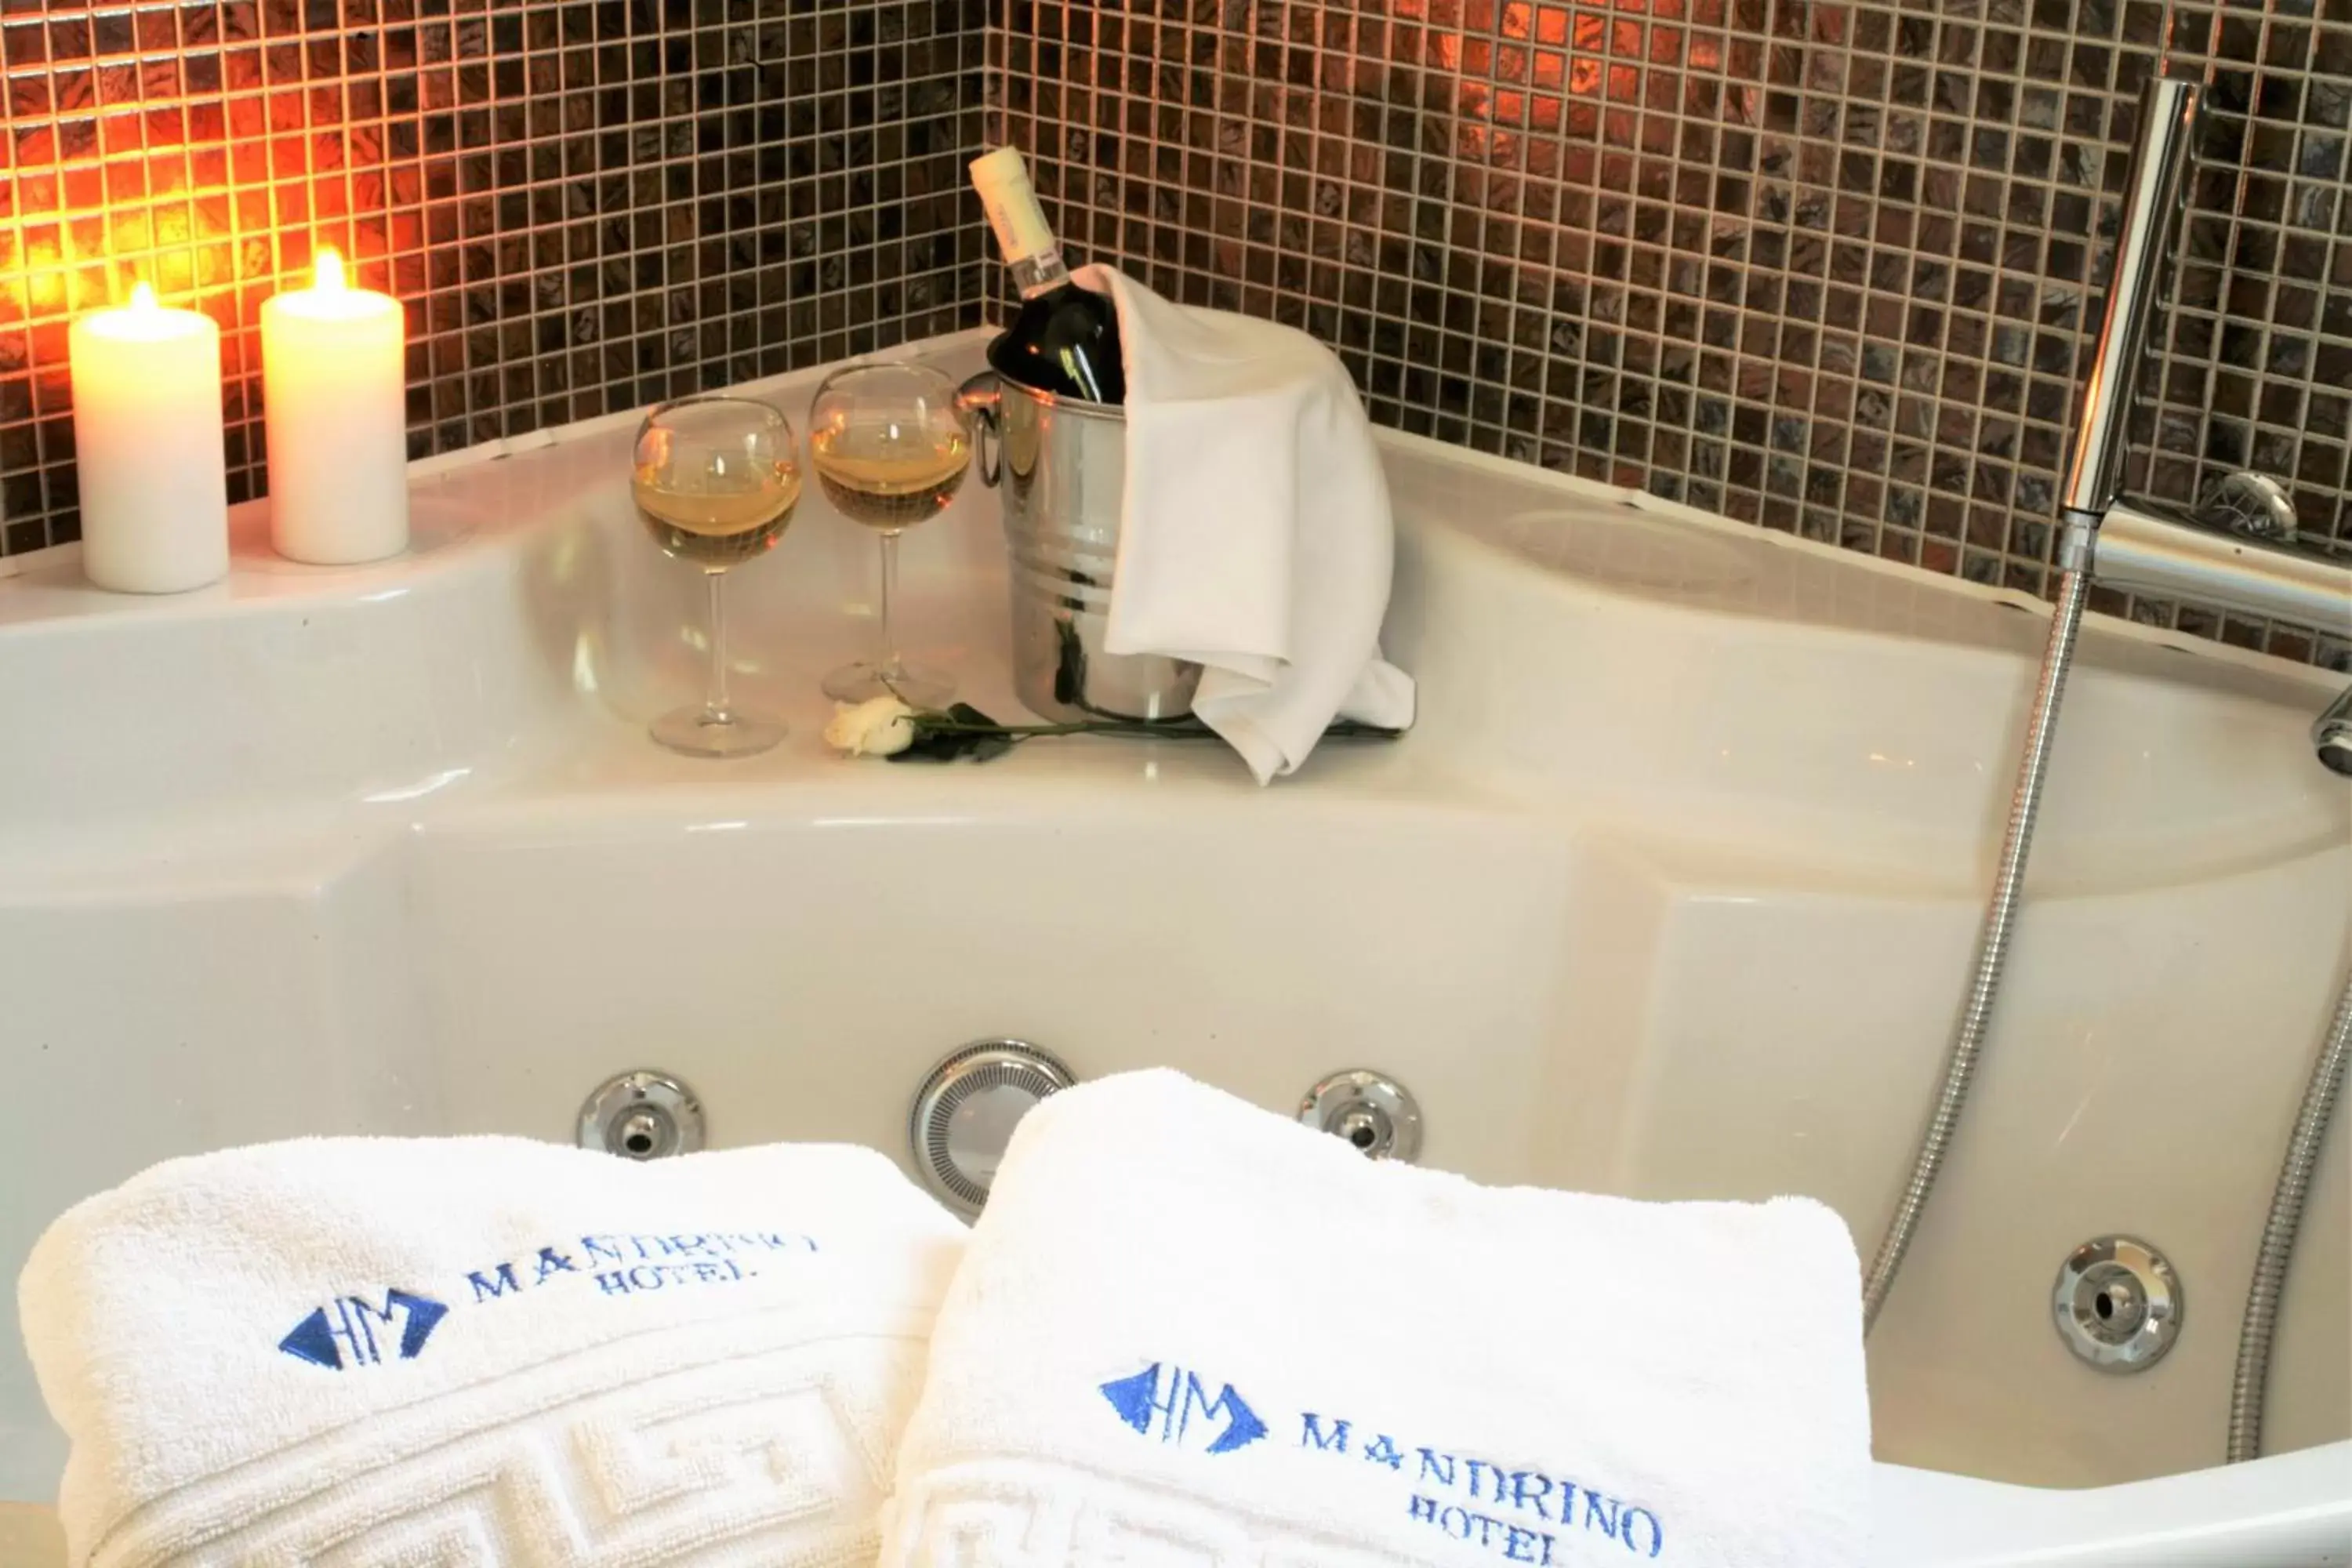 Photo of the whole room, Bathroom in Mandrino Hotel